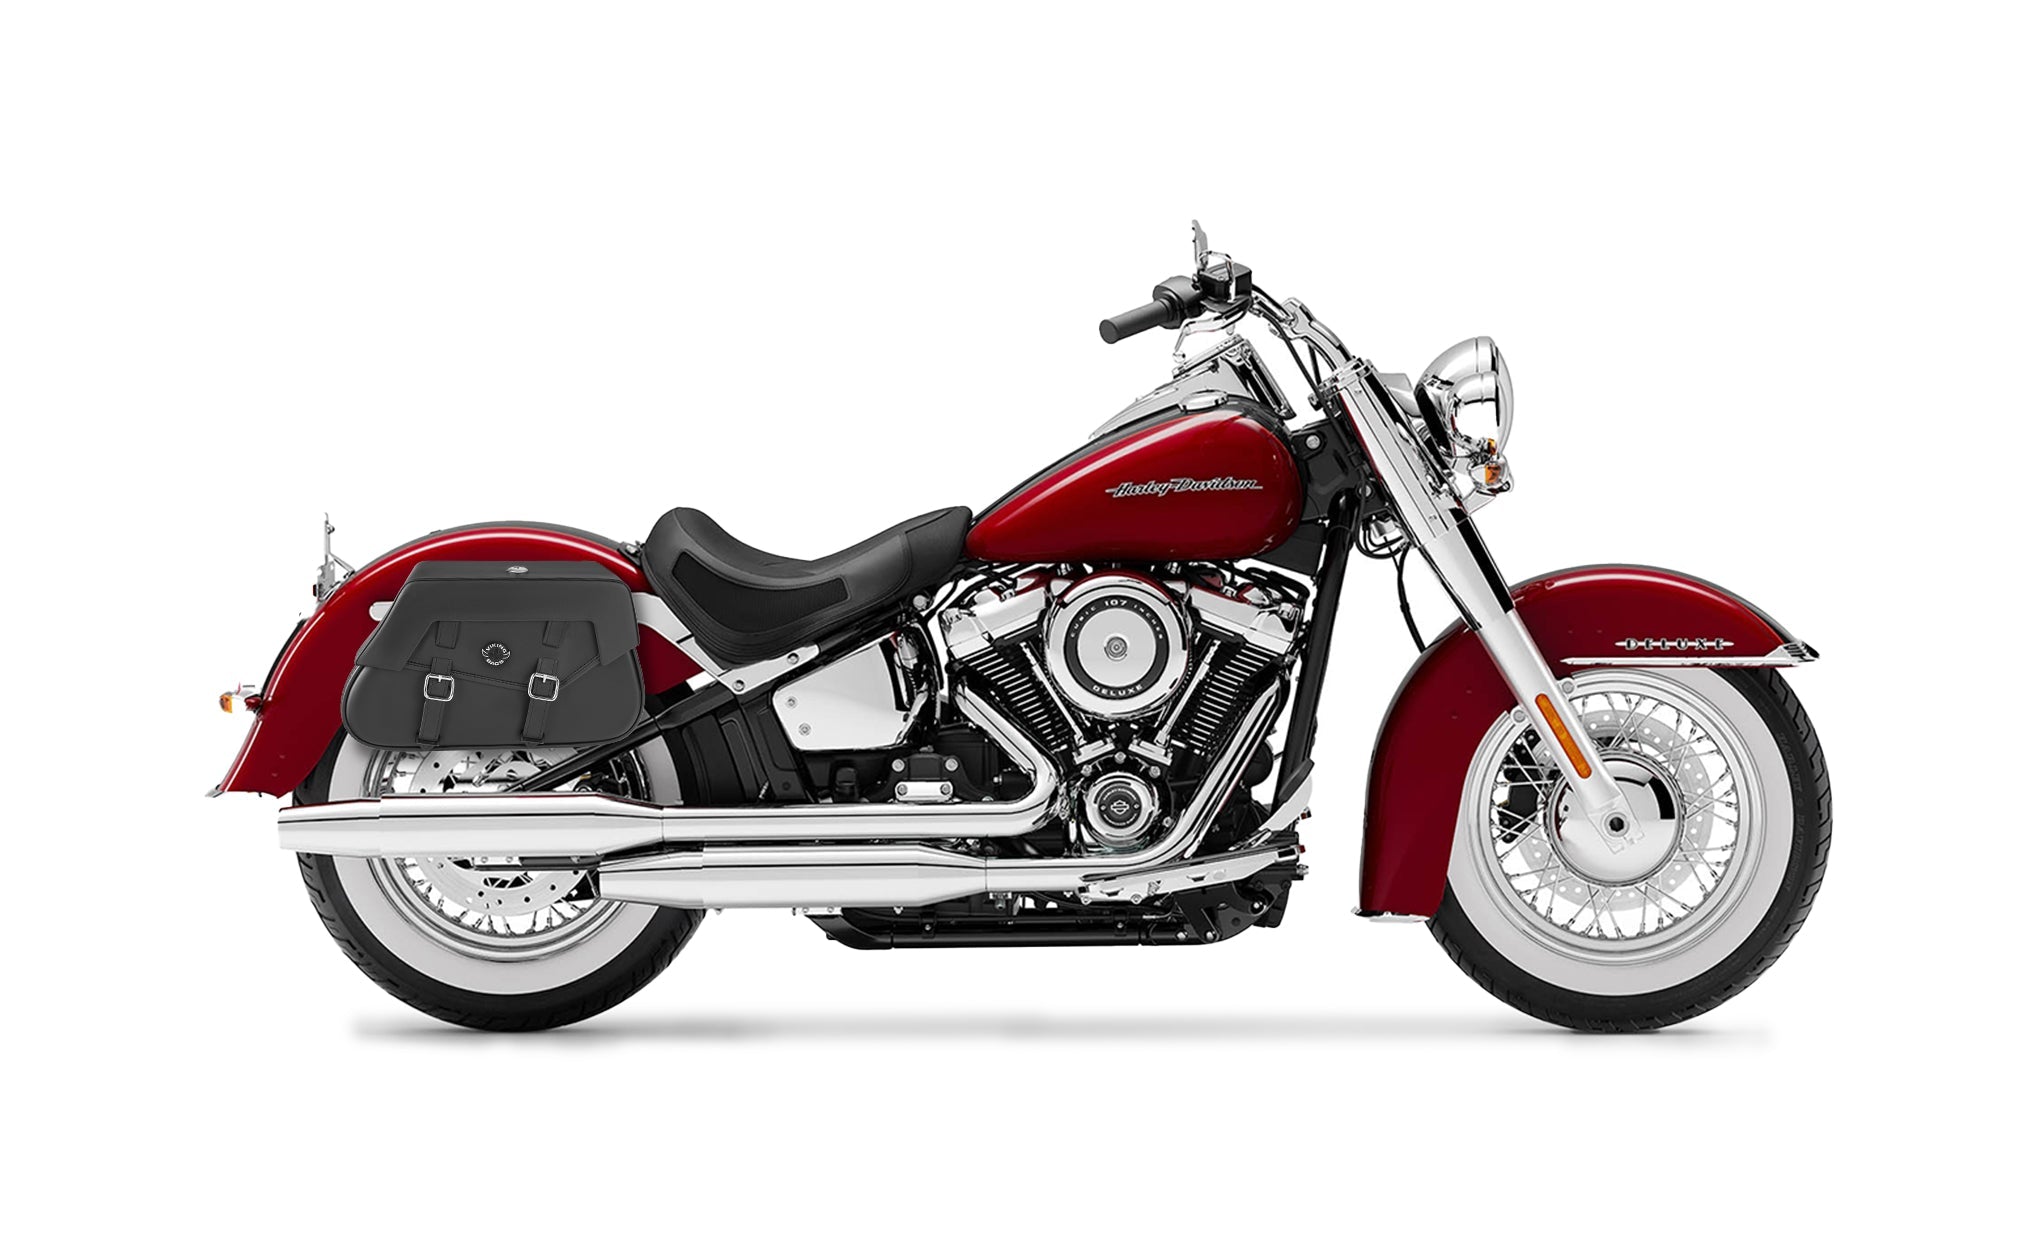 Viking Loki Classic Small Leather Motorcycle Saddlebags For Harley Softail Deluxe Flstn I on Bike Photo @expand